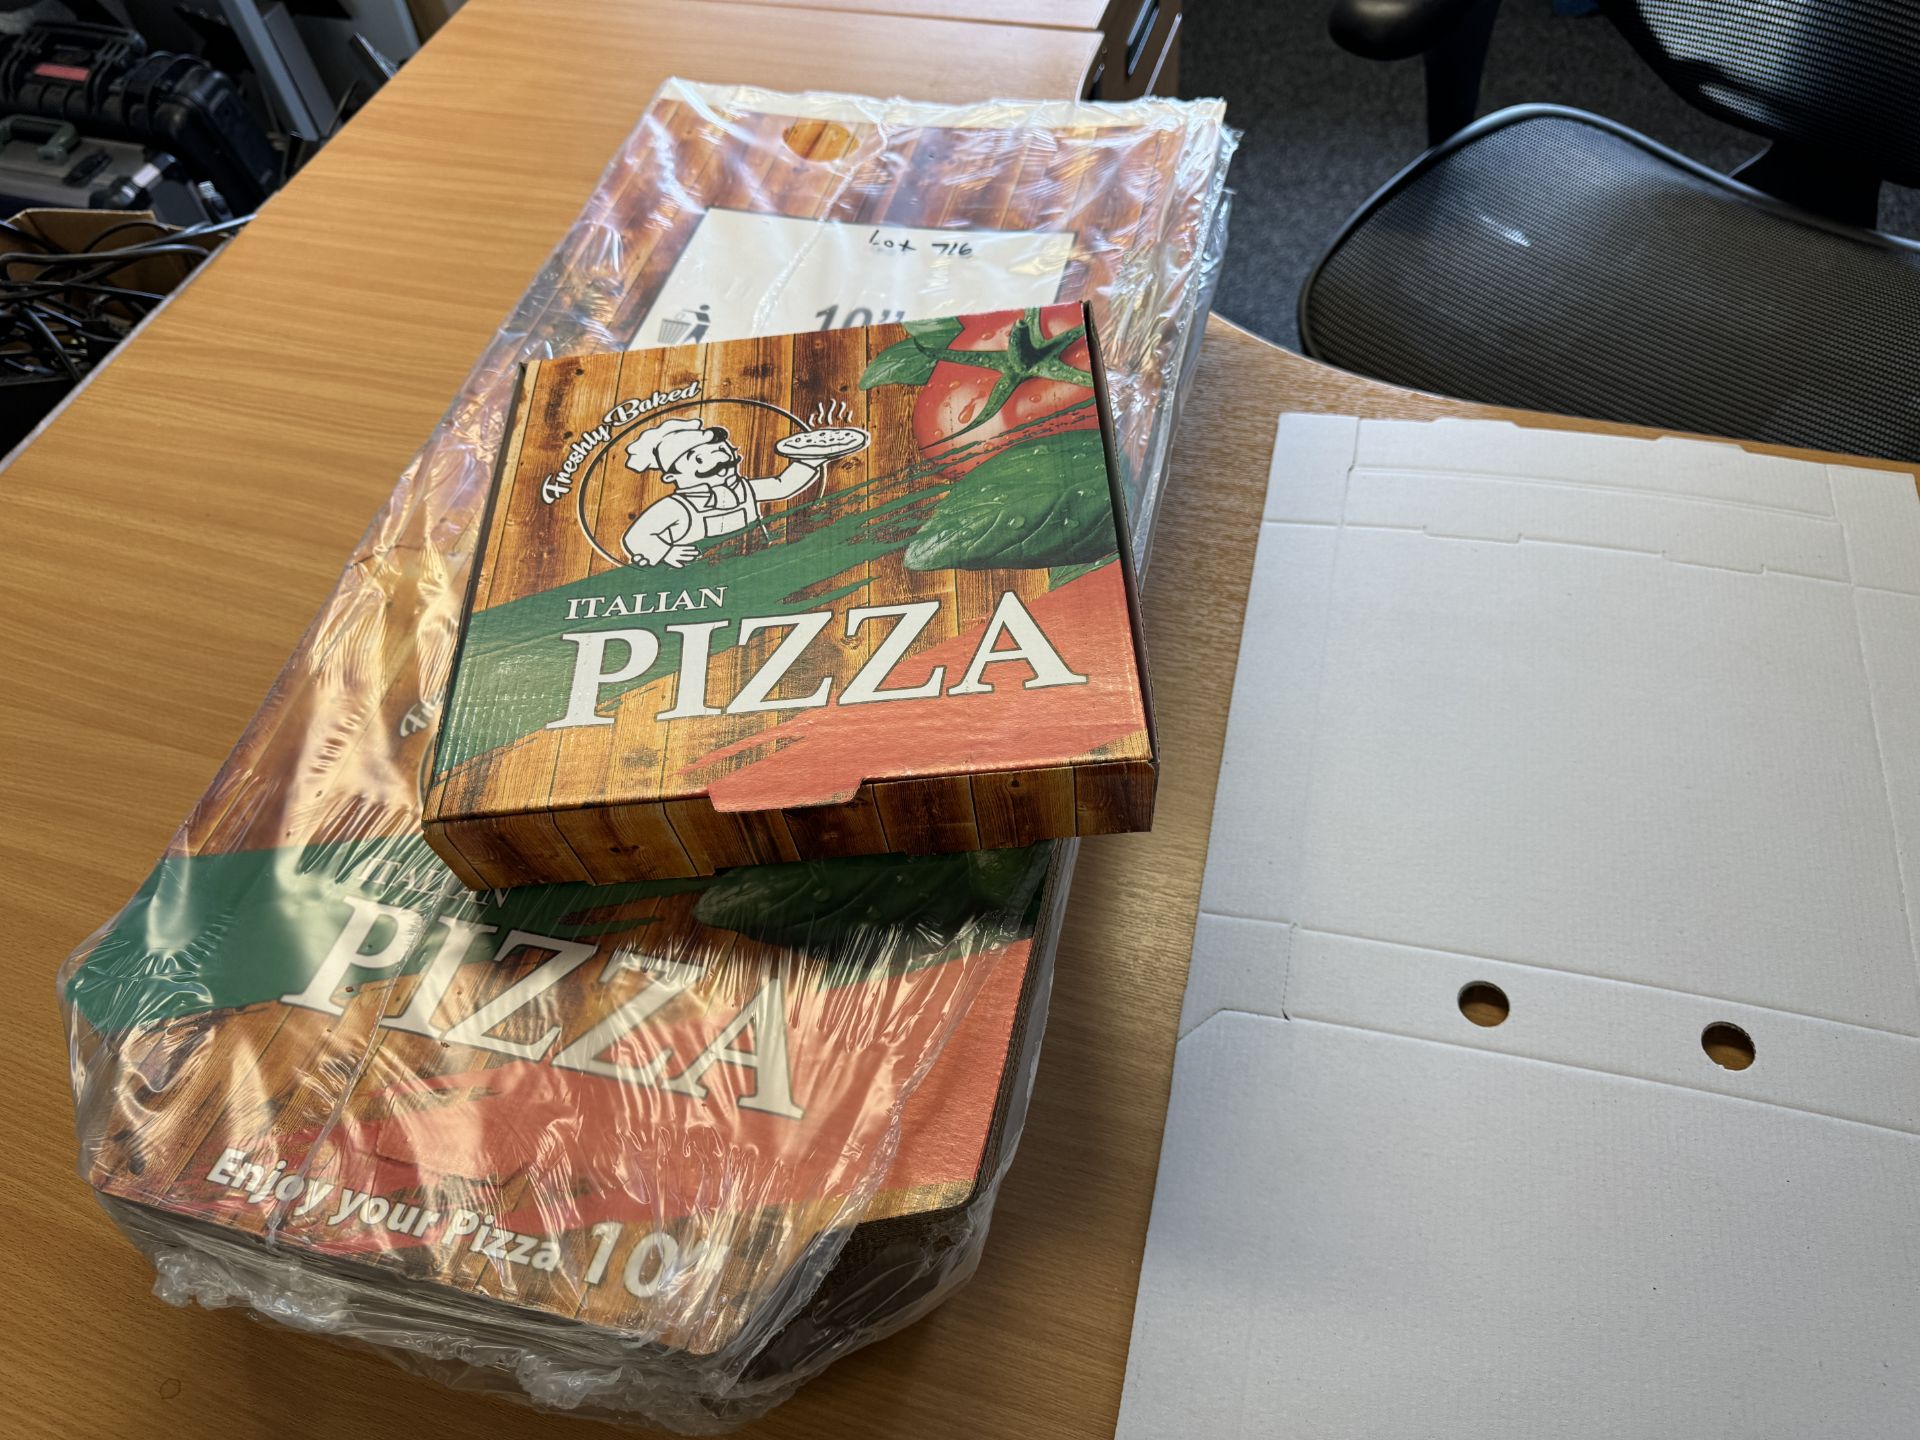 Circa 3,000 - 10" Pizza Boxes - RRP £918